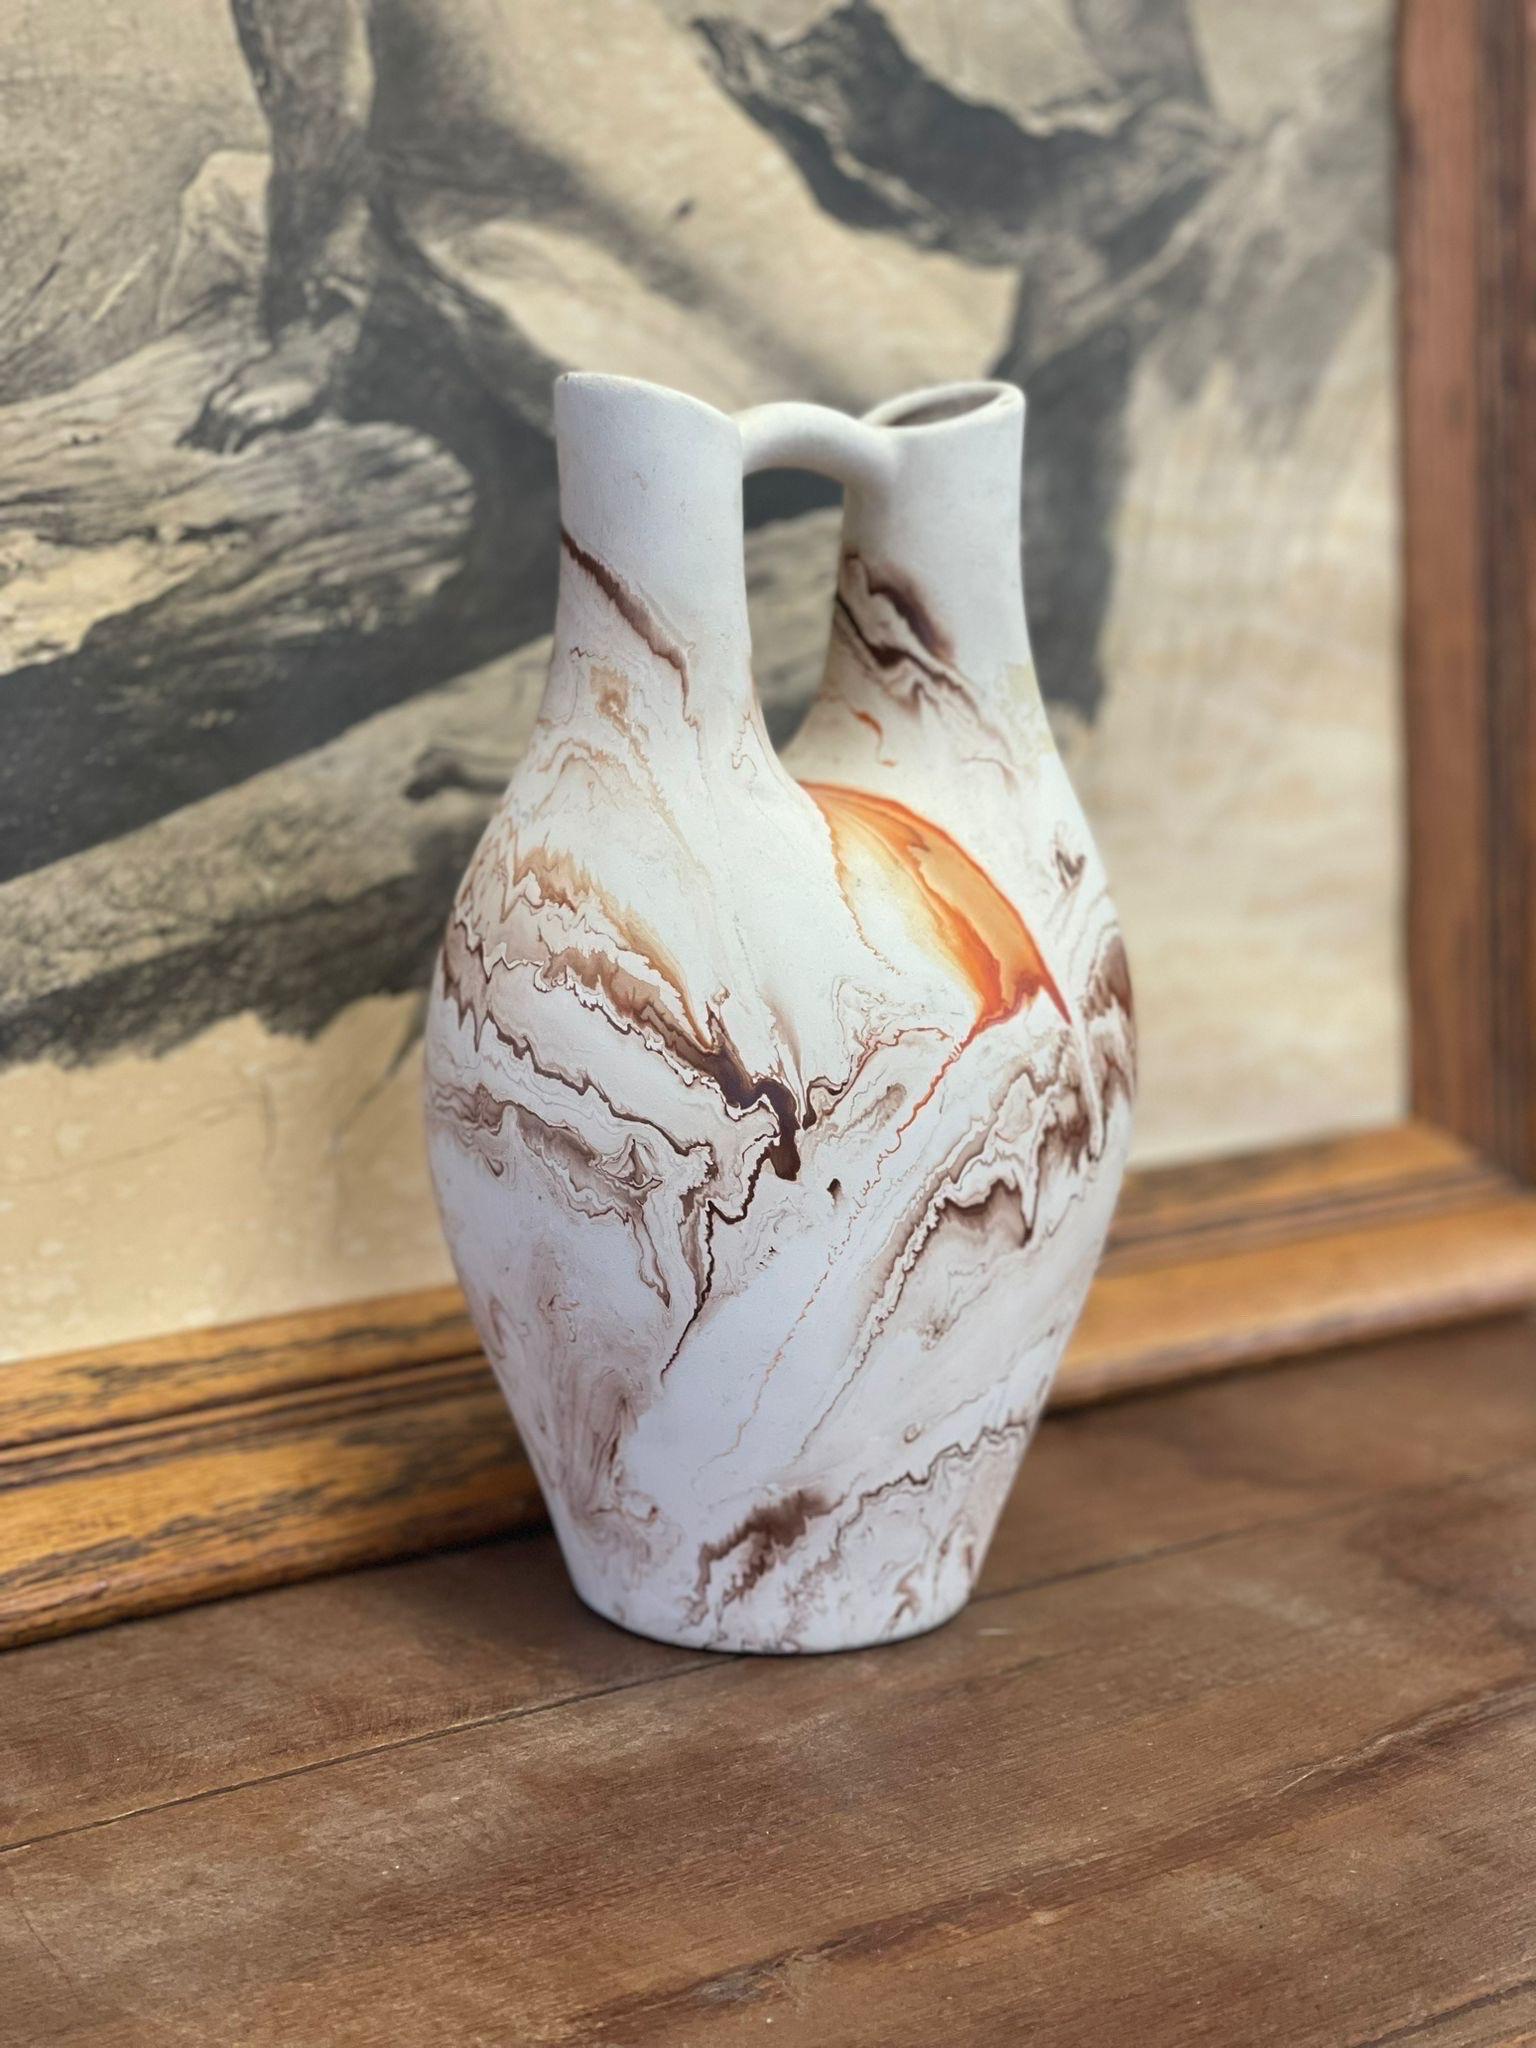 Vintage Handmade Double Spout Nemadji Vase Minnesota Multicolored Stamped ceramic vase antique pottery orange and blue designed decor

Dimensions. 6 W ; 4 1/2 D ; 10 H